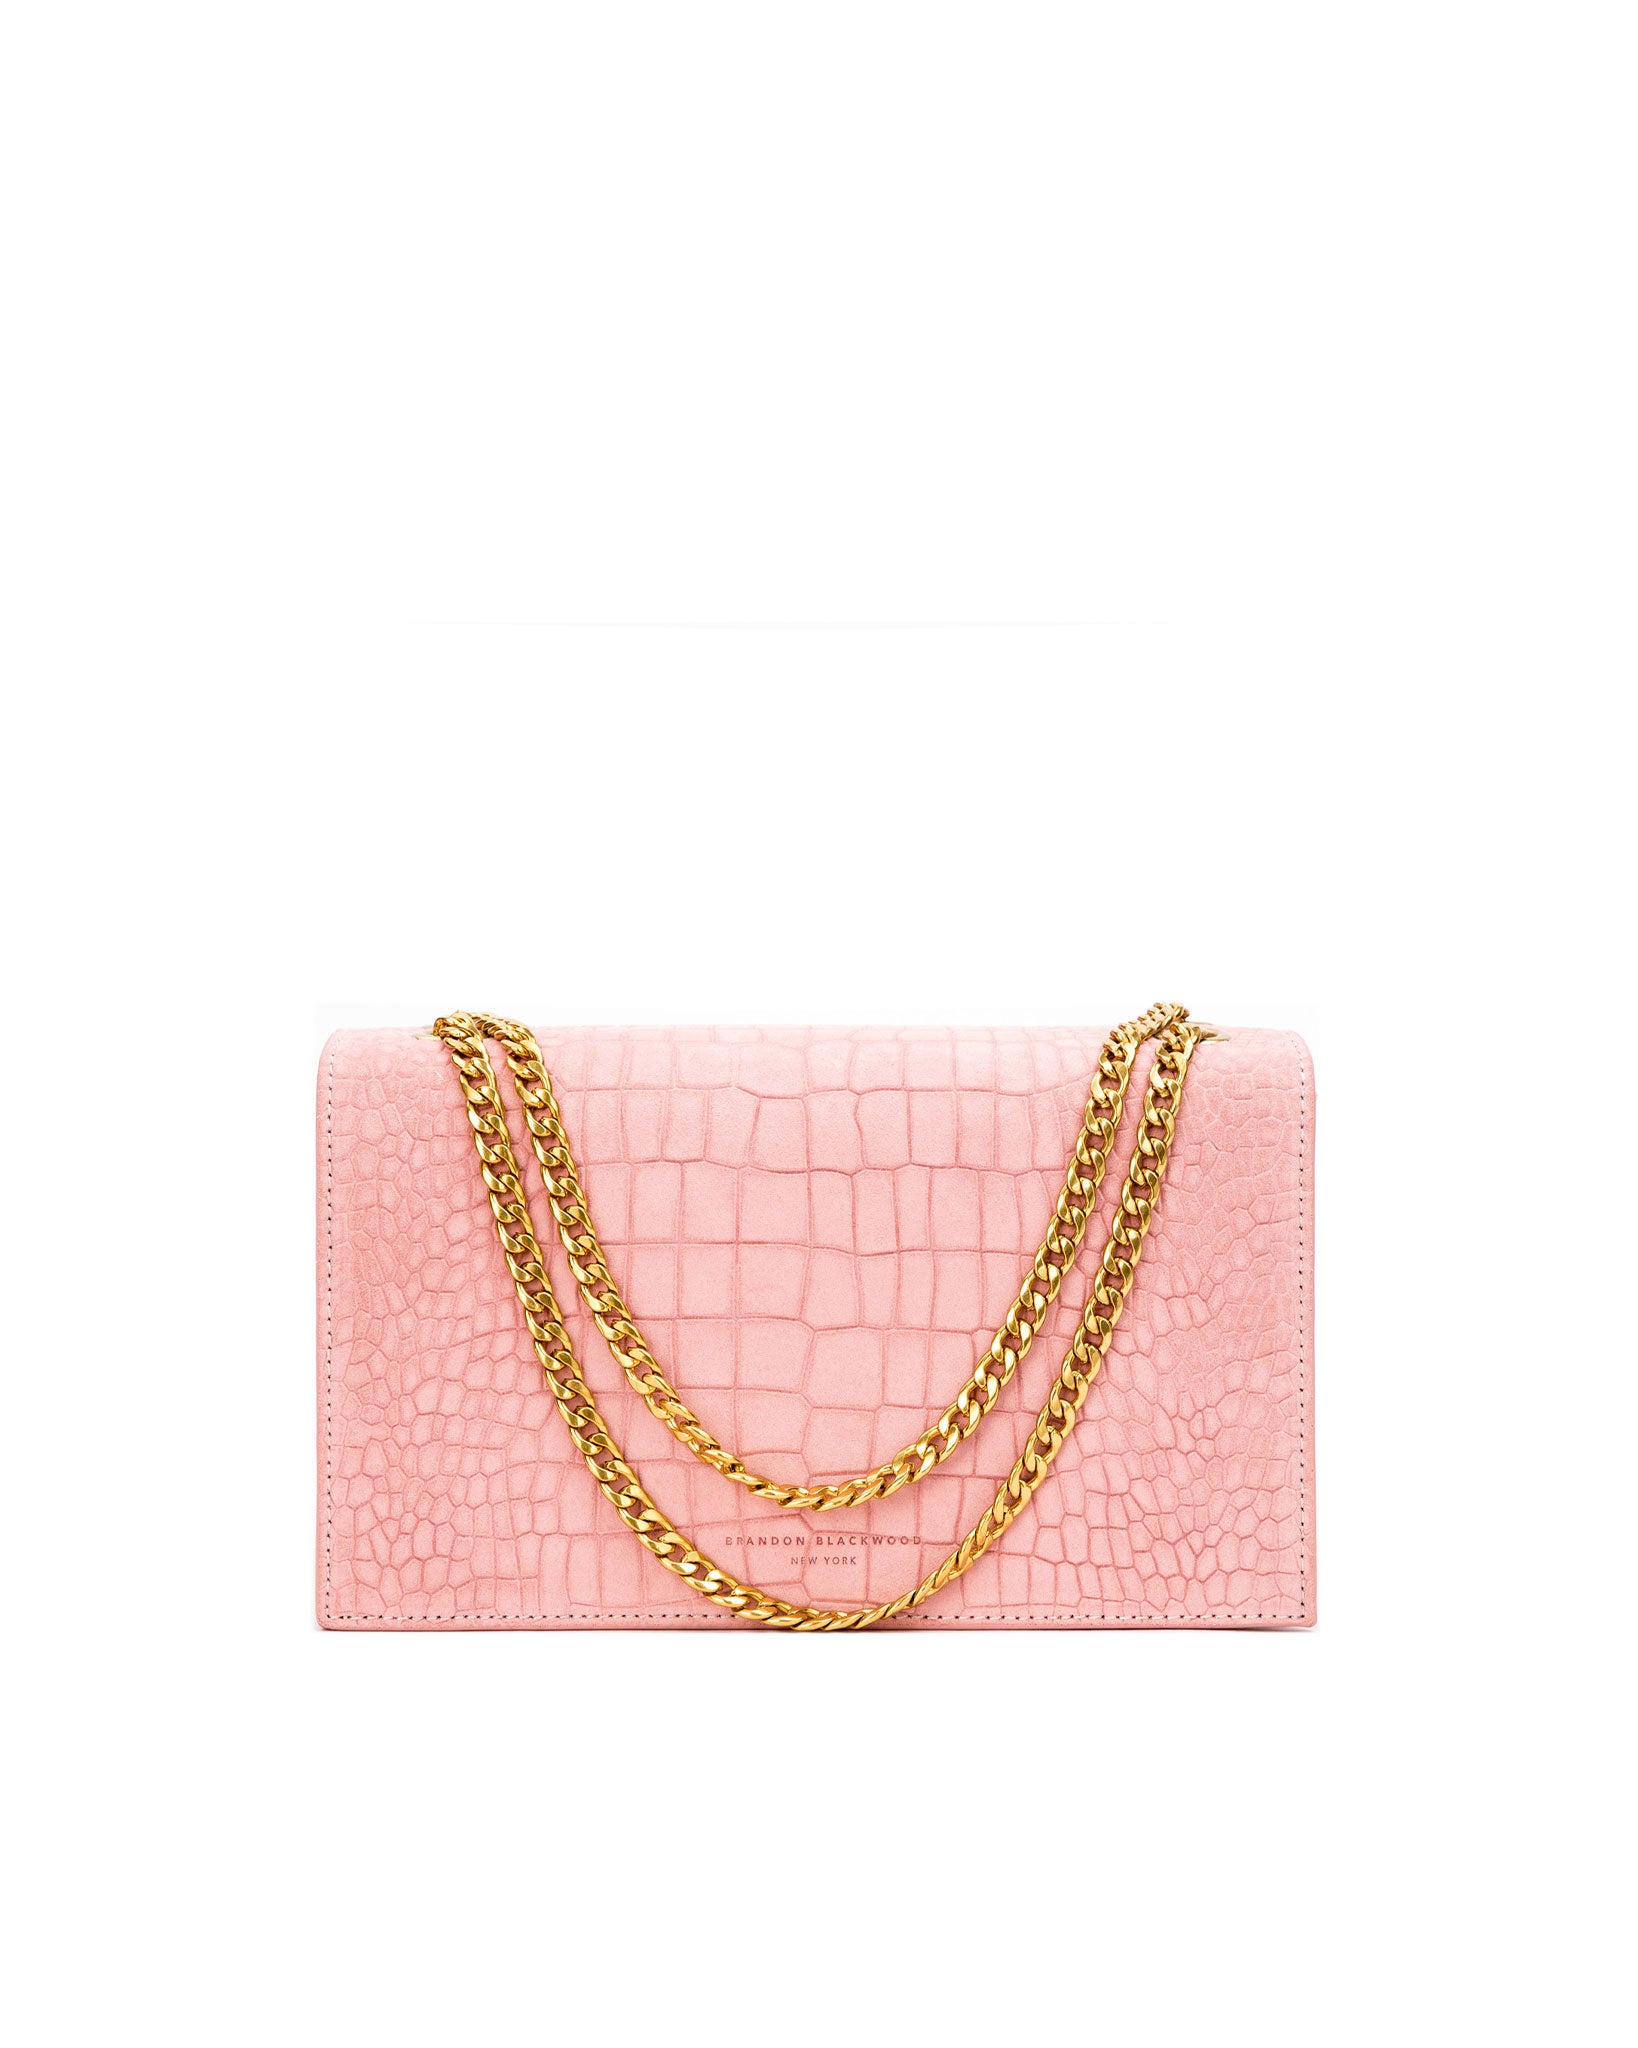 Brandon Blackwood New York - Standard Sophia Bag - Pink Croc Embossed w/ Gold Hardware